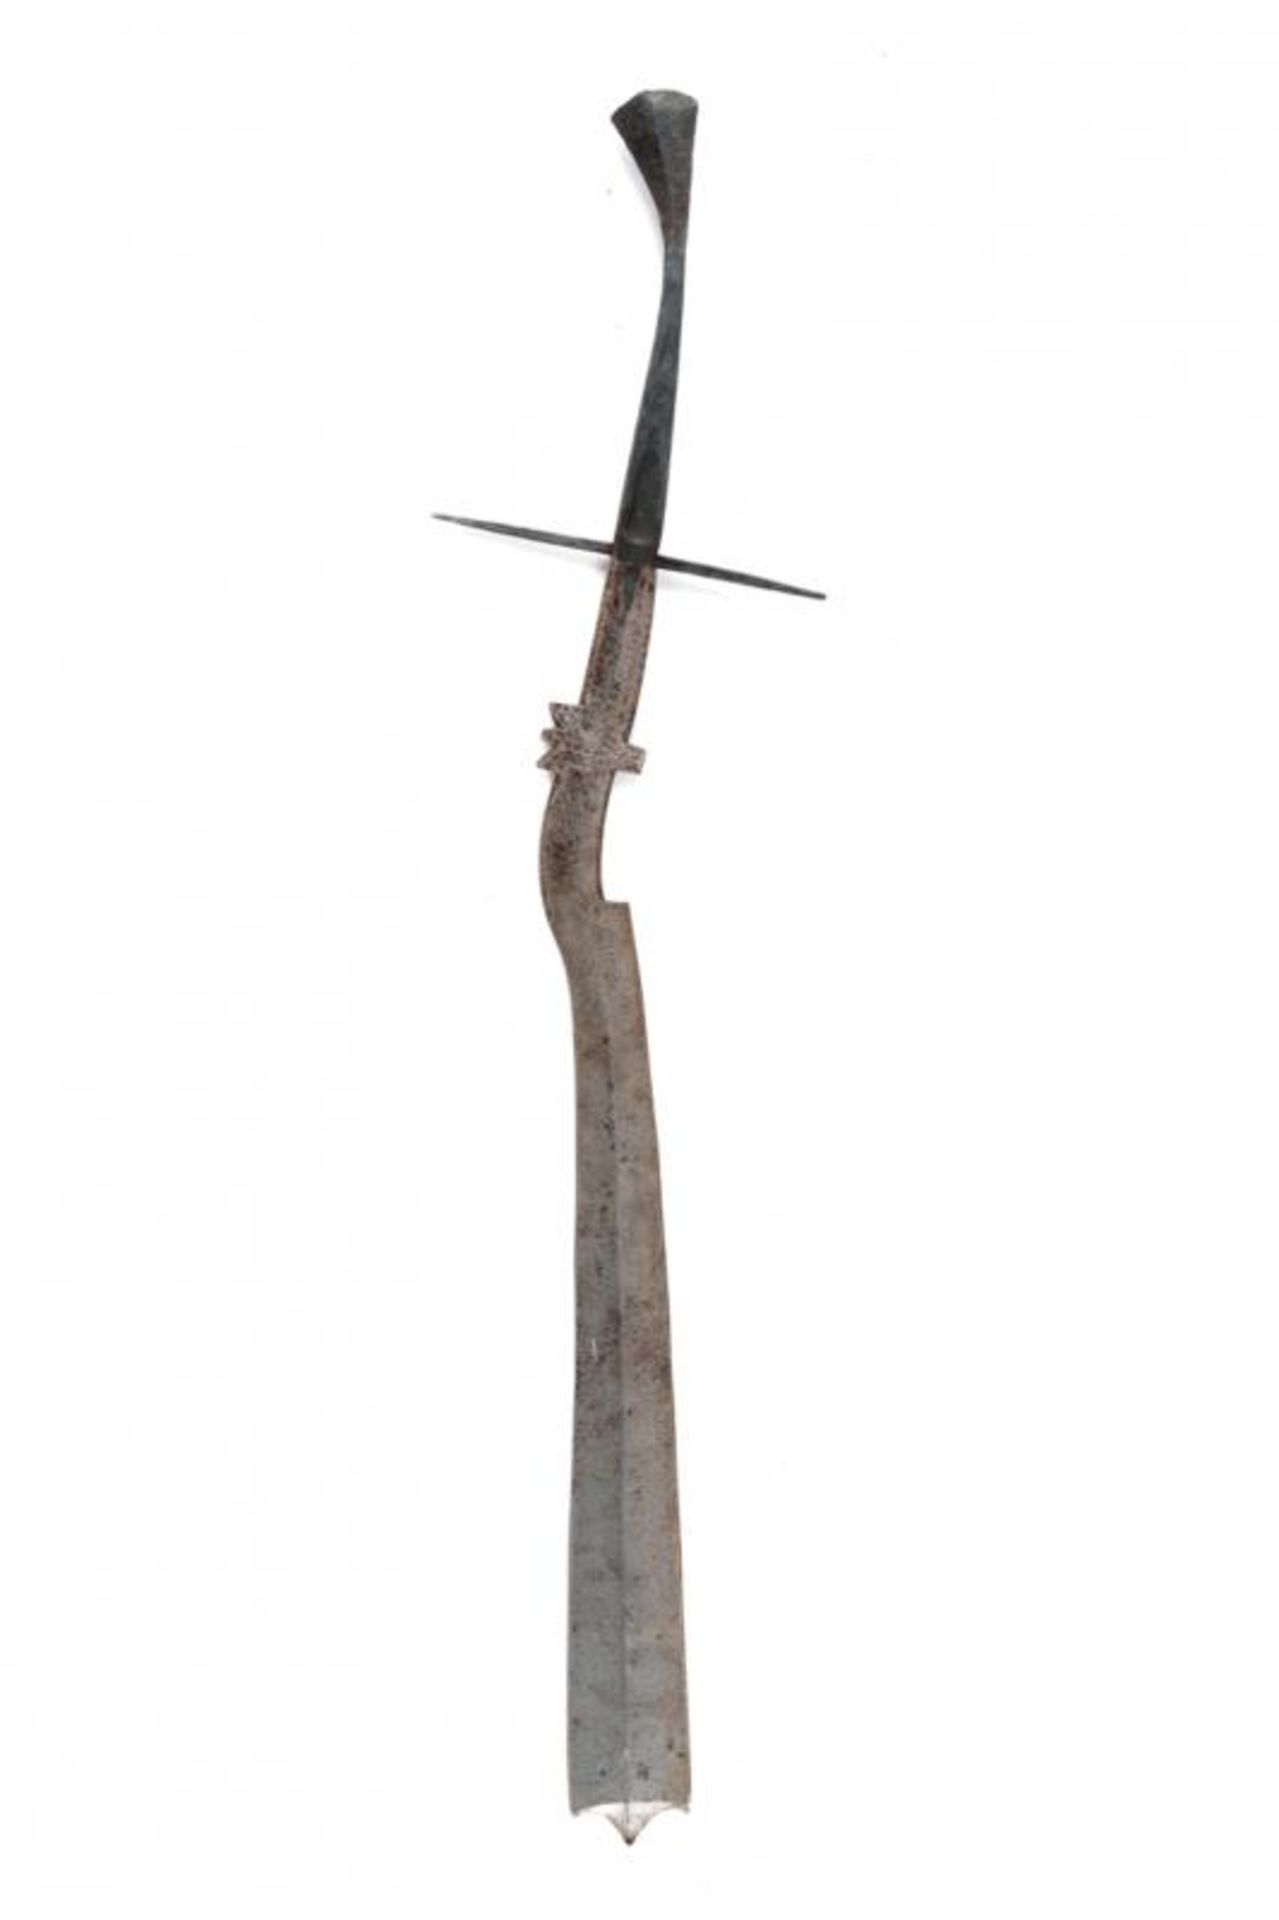 A very scarce and early milam (sword) of the Garo-Naga